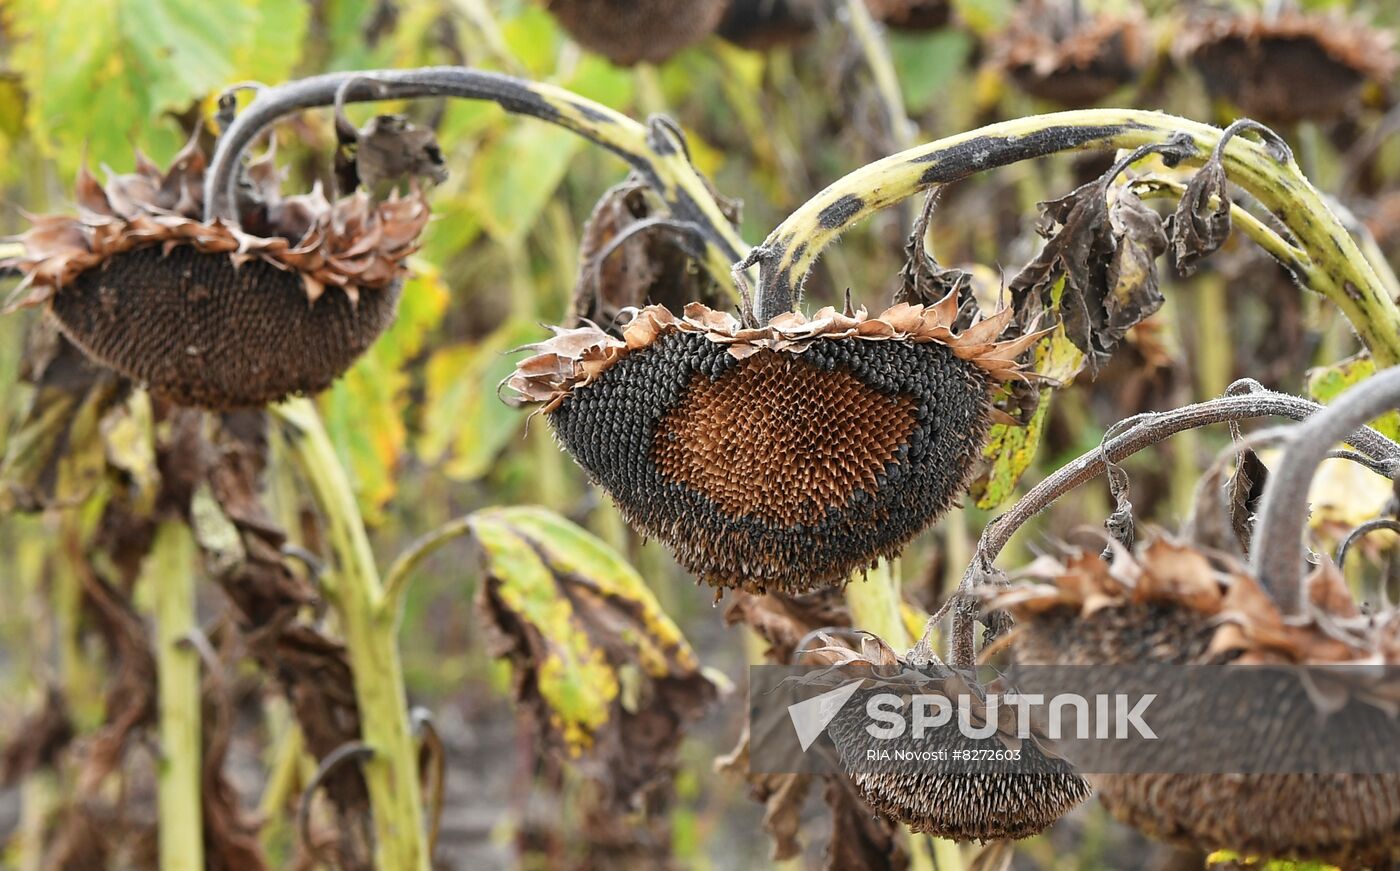 Ukraine Russia Military Operation Sunflower Harvesting